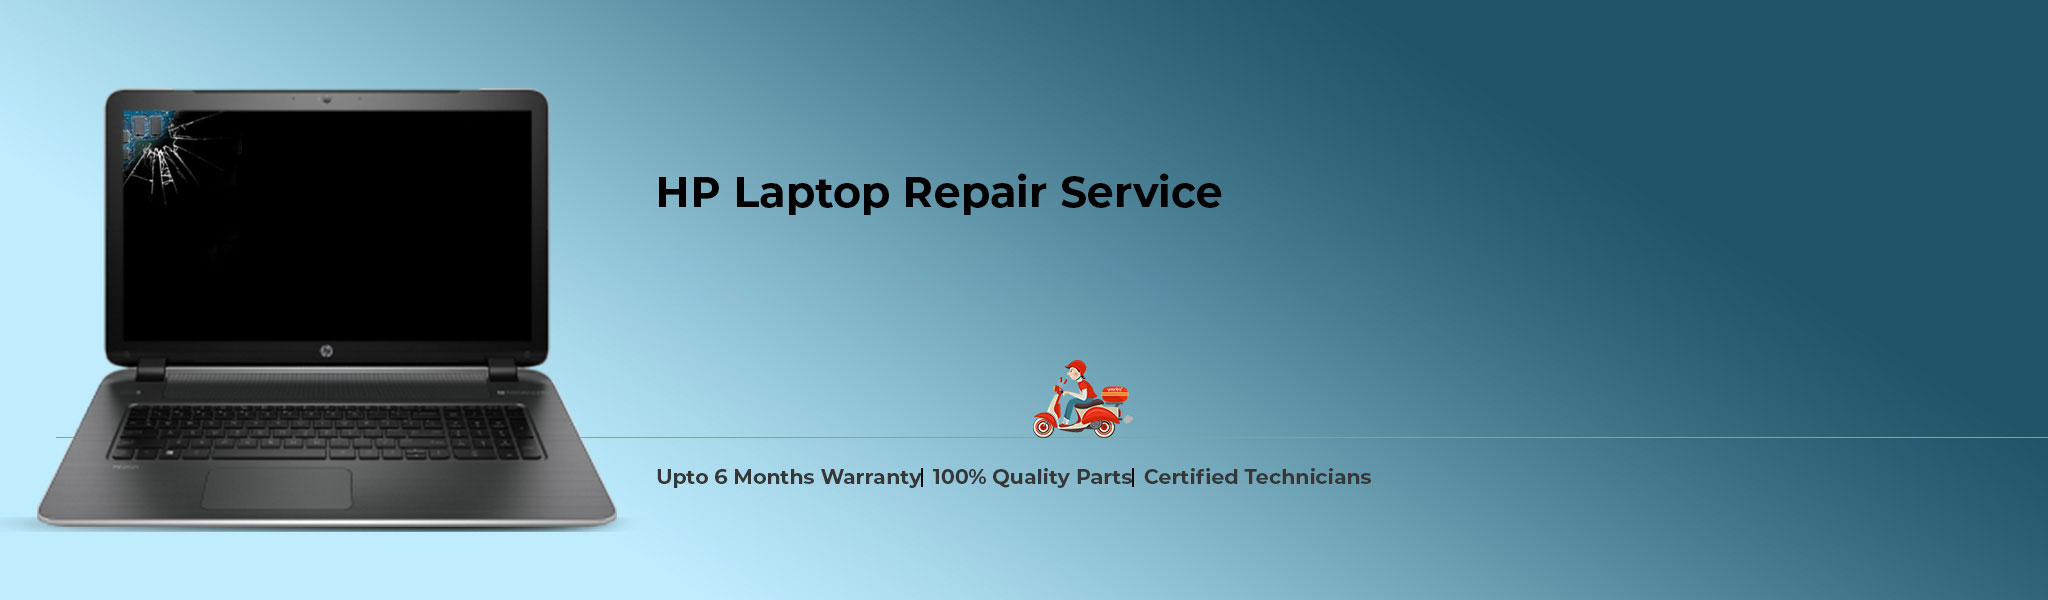 hp-laptop-repair.jpg